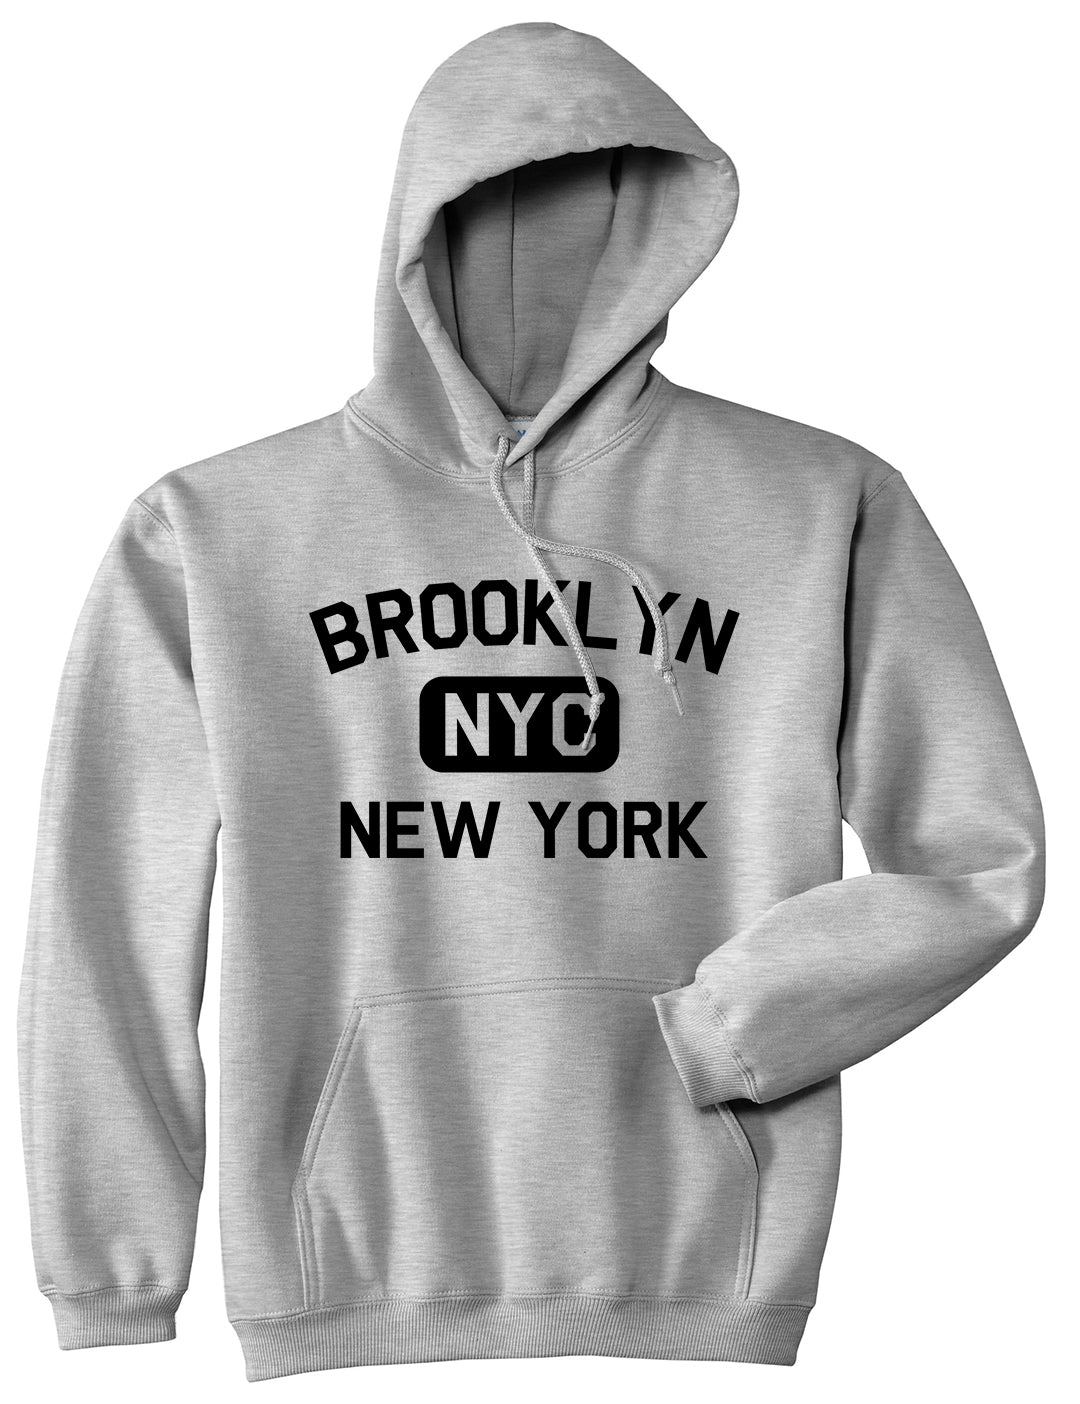 Brooklyn Gym NYC New York Mens Pullover Hoodie Grey